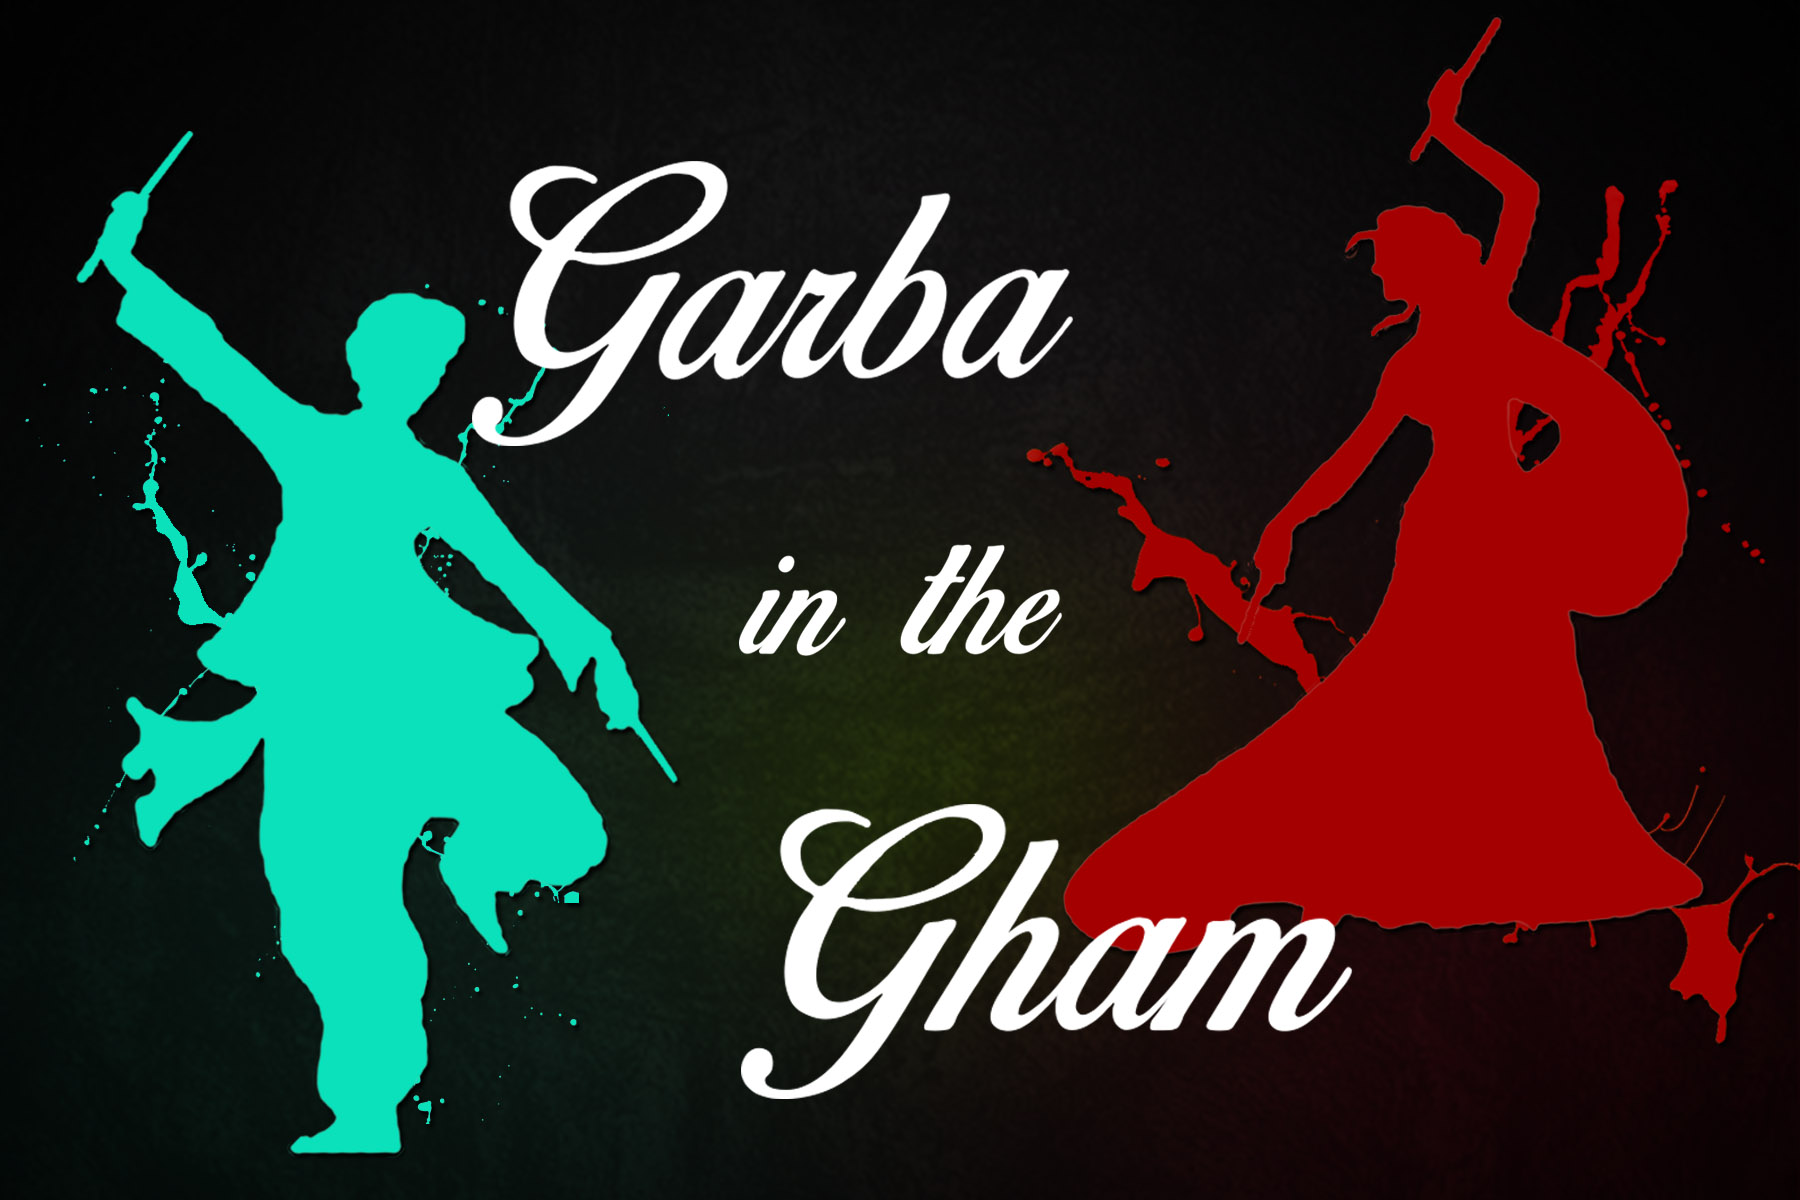 Garba in the Gham